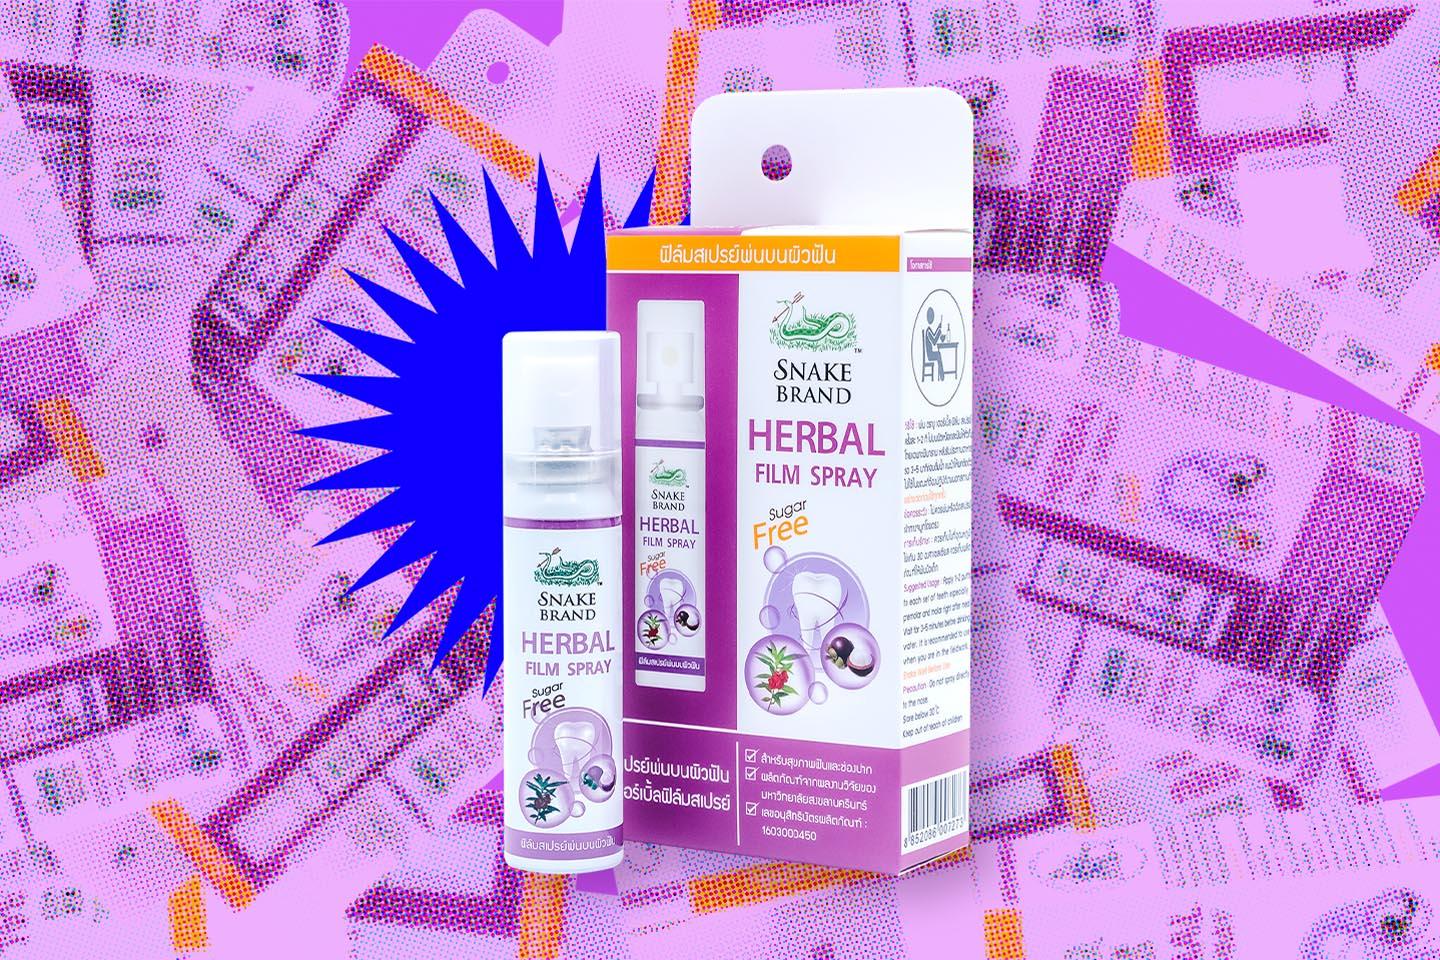 british-Snake-Brand-Herbal-Film-Spray-oral-health-market-SPACEBAR-Main